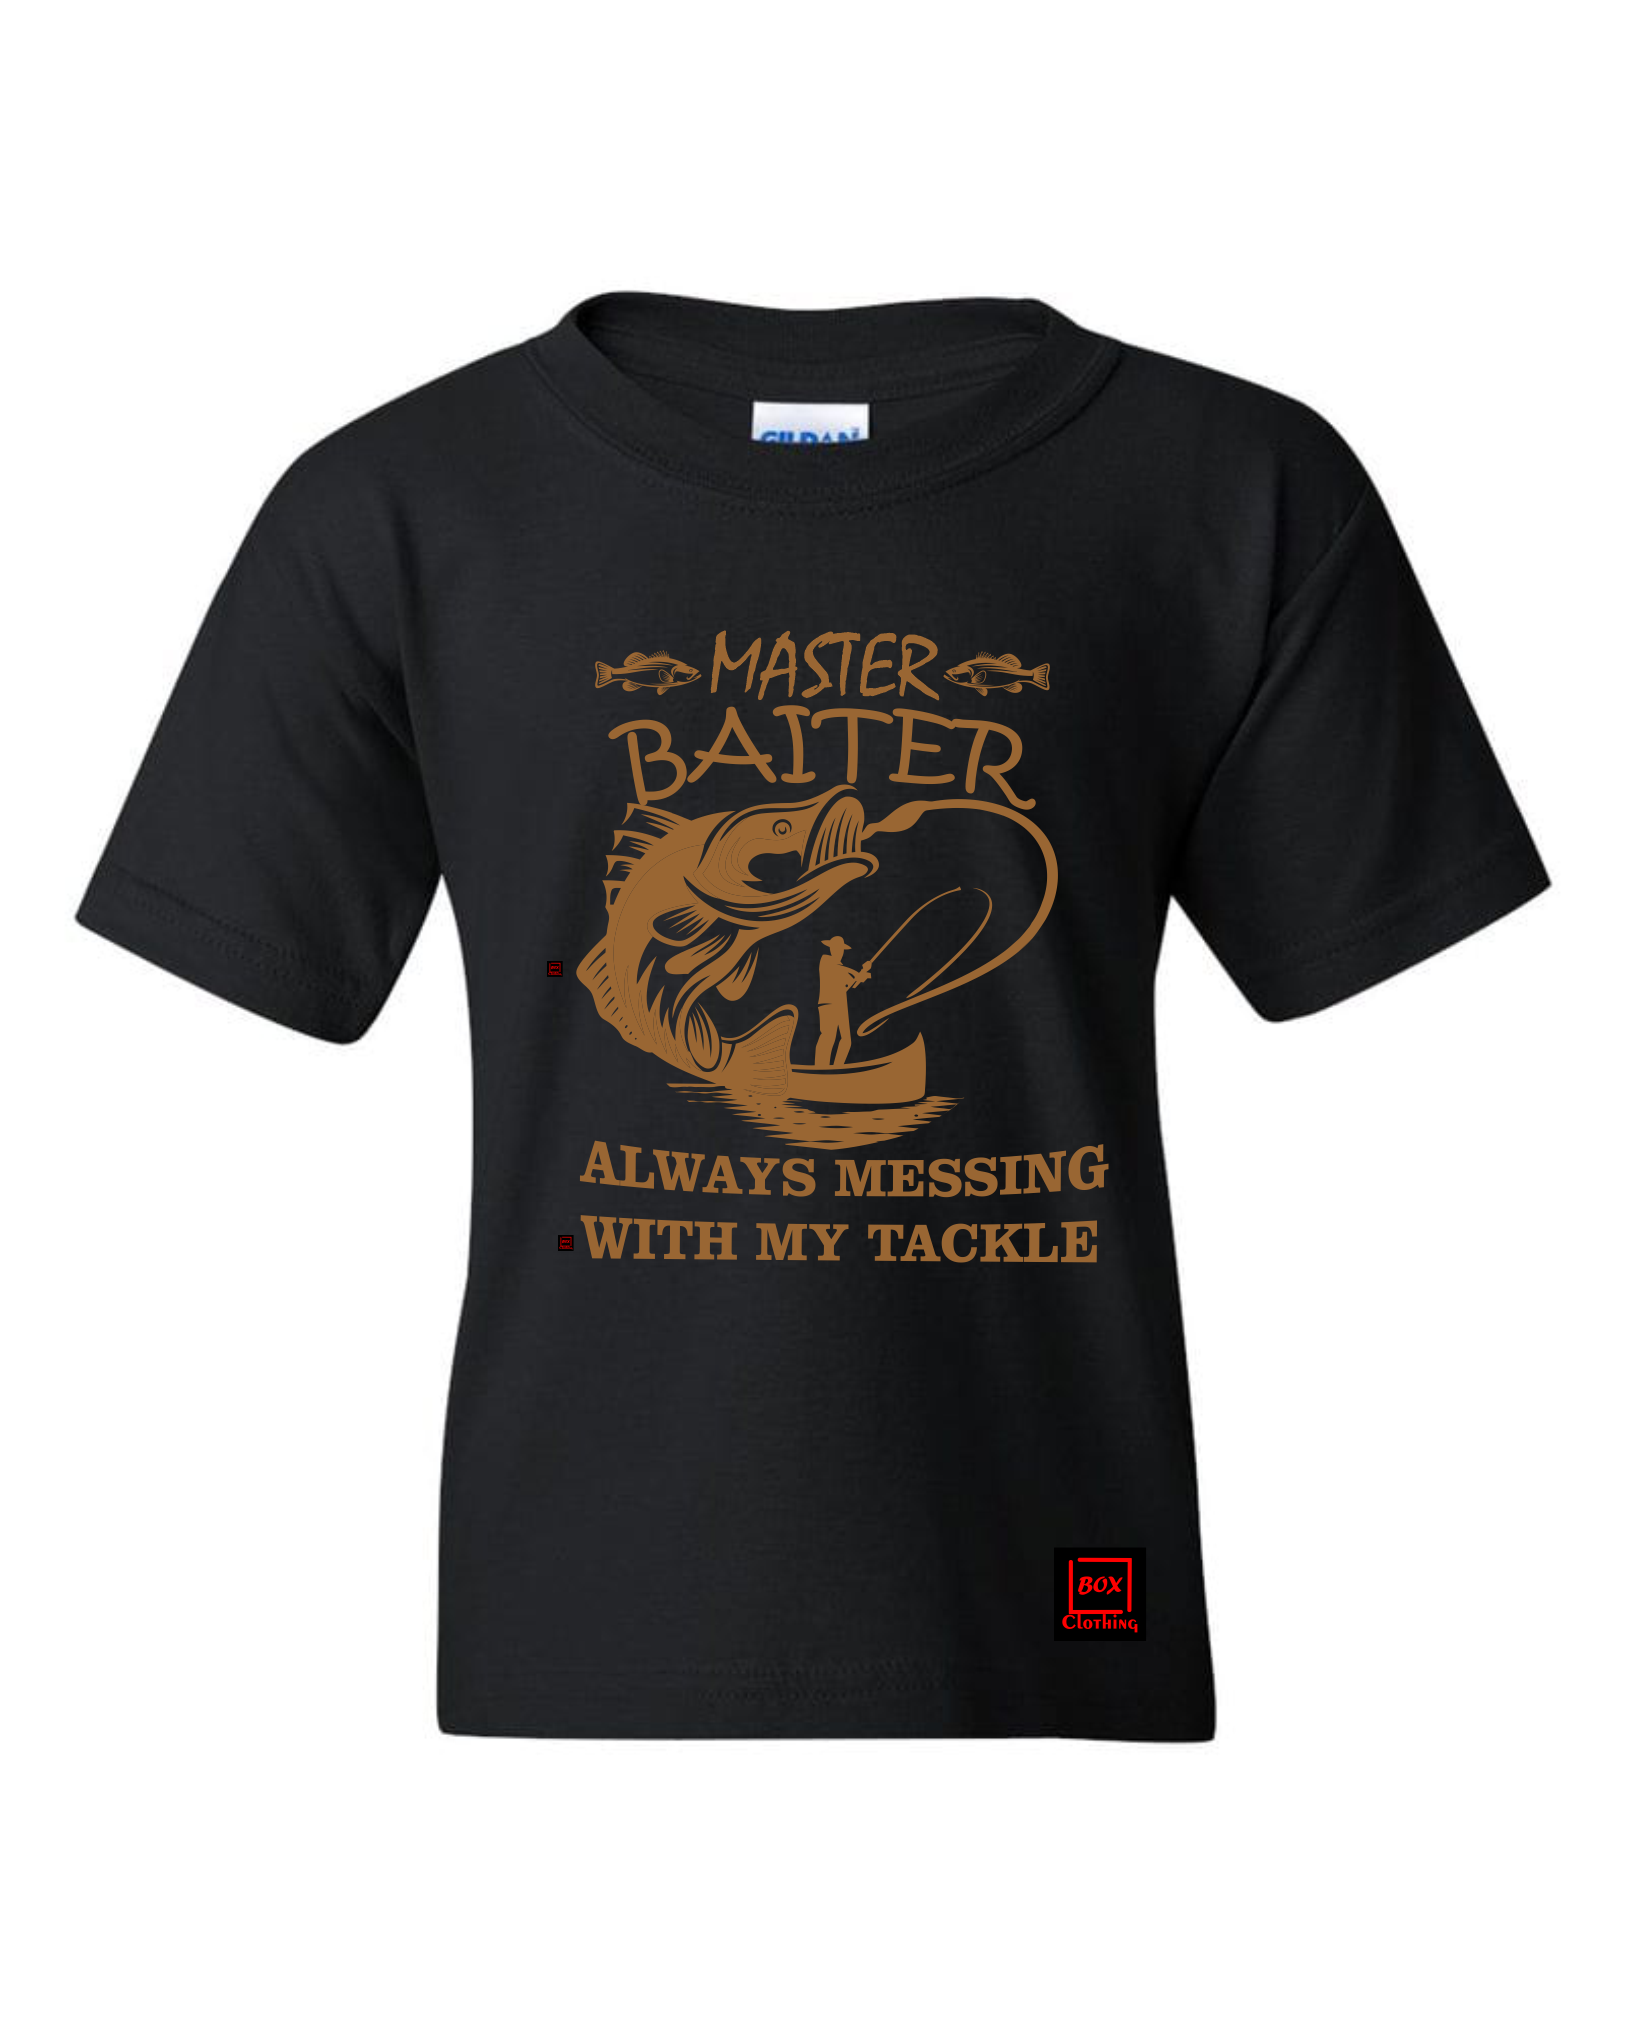 Master Baiter – Red Box Clothing Co.